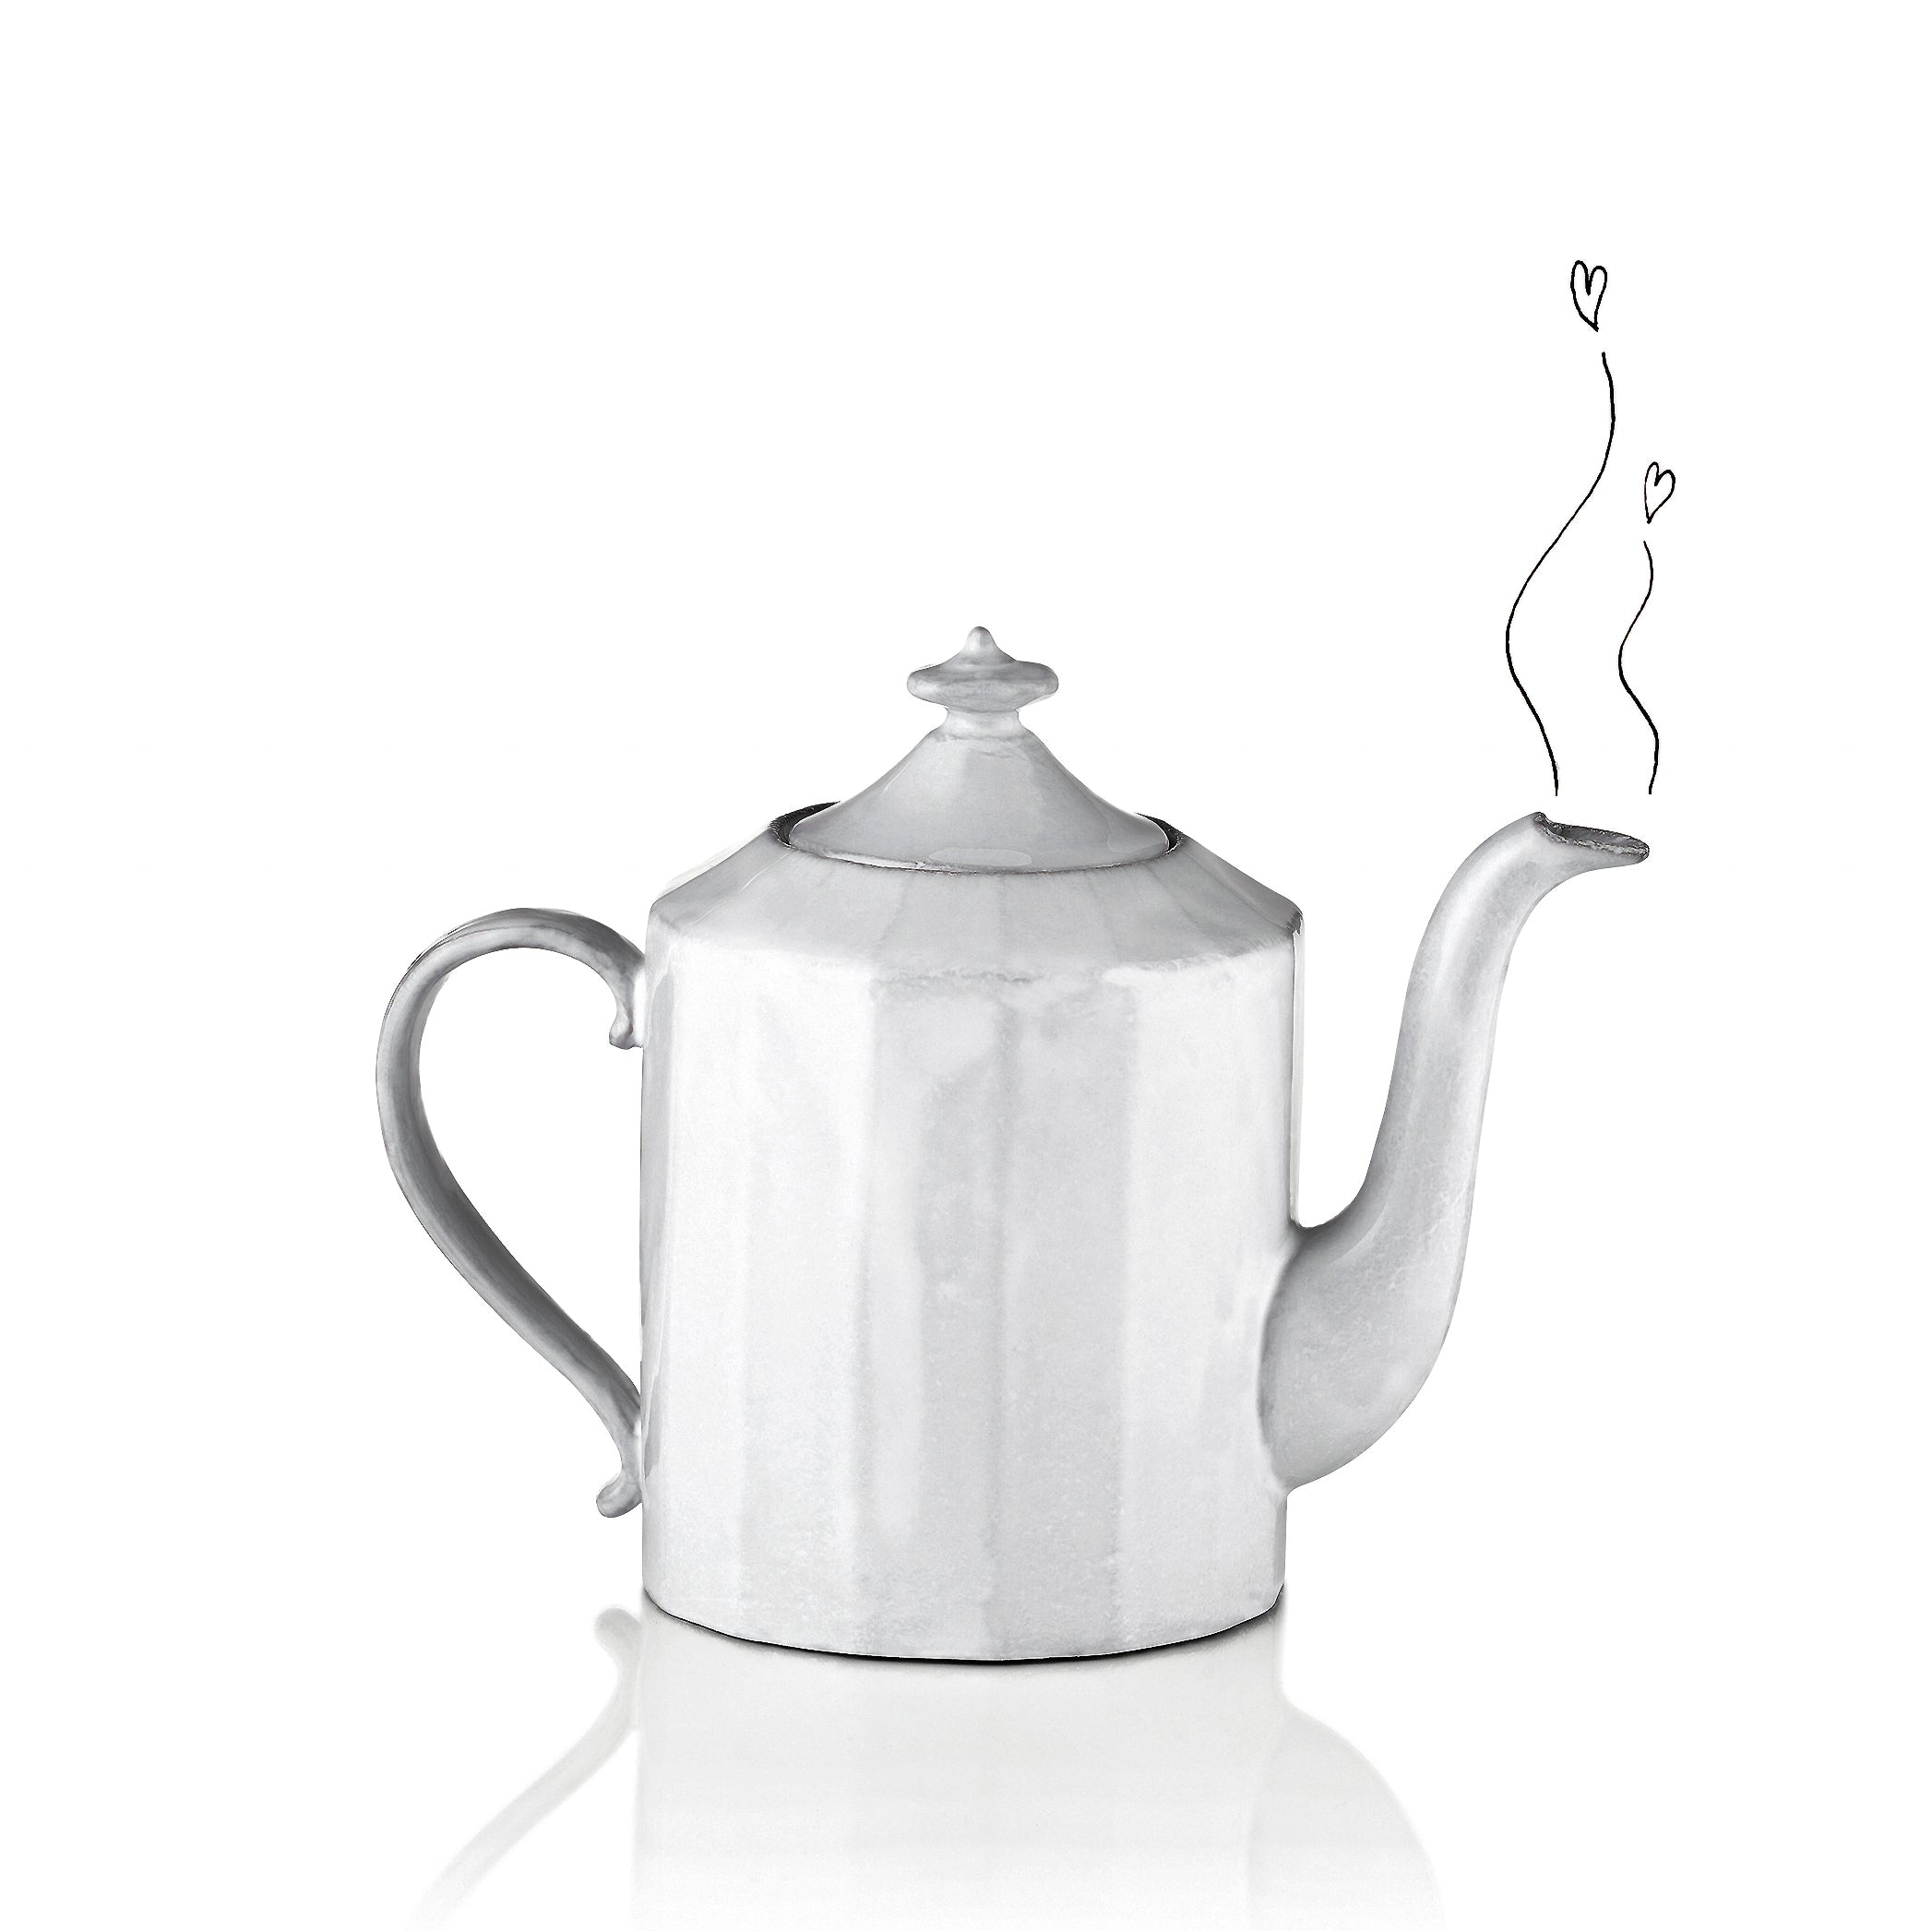 Small Octave Teapot by Astier de Villatte, 18.5cm